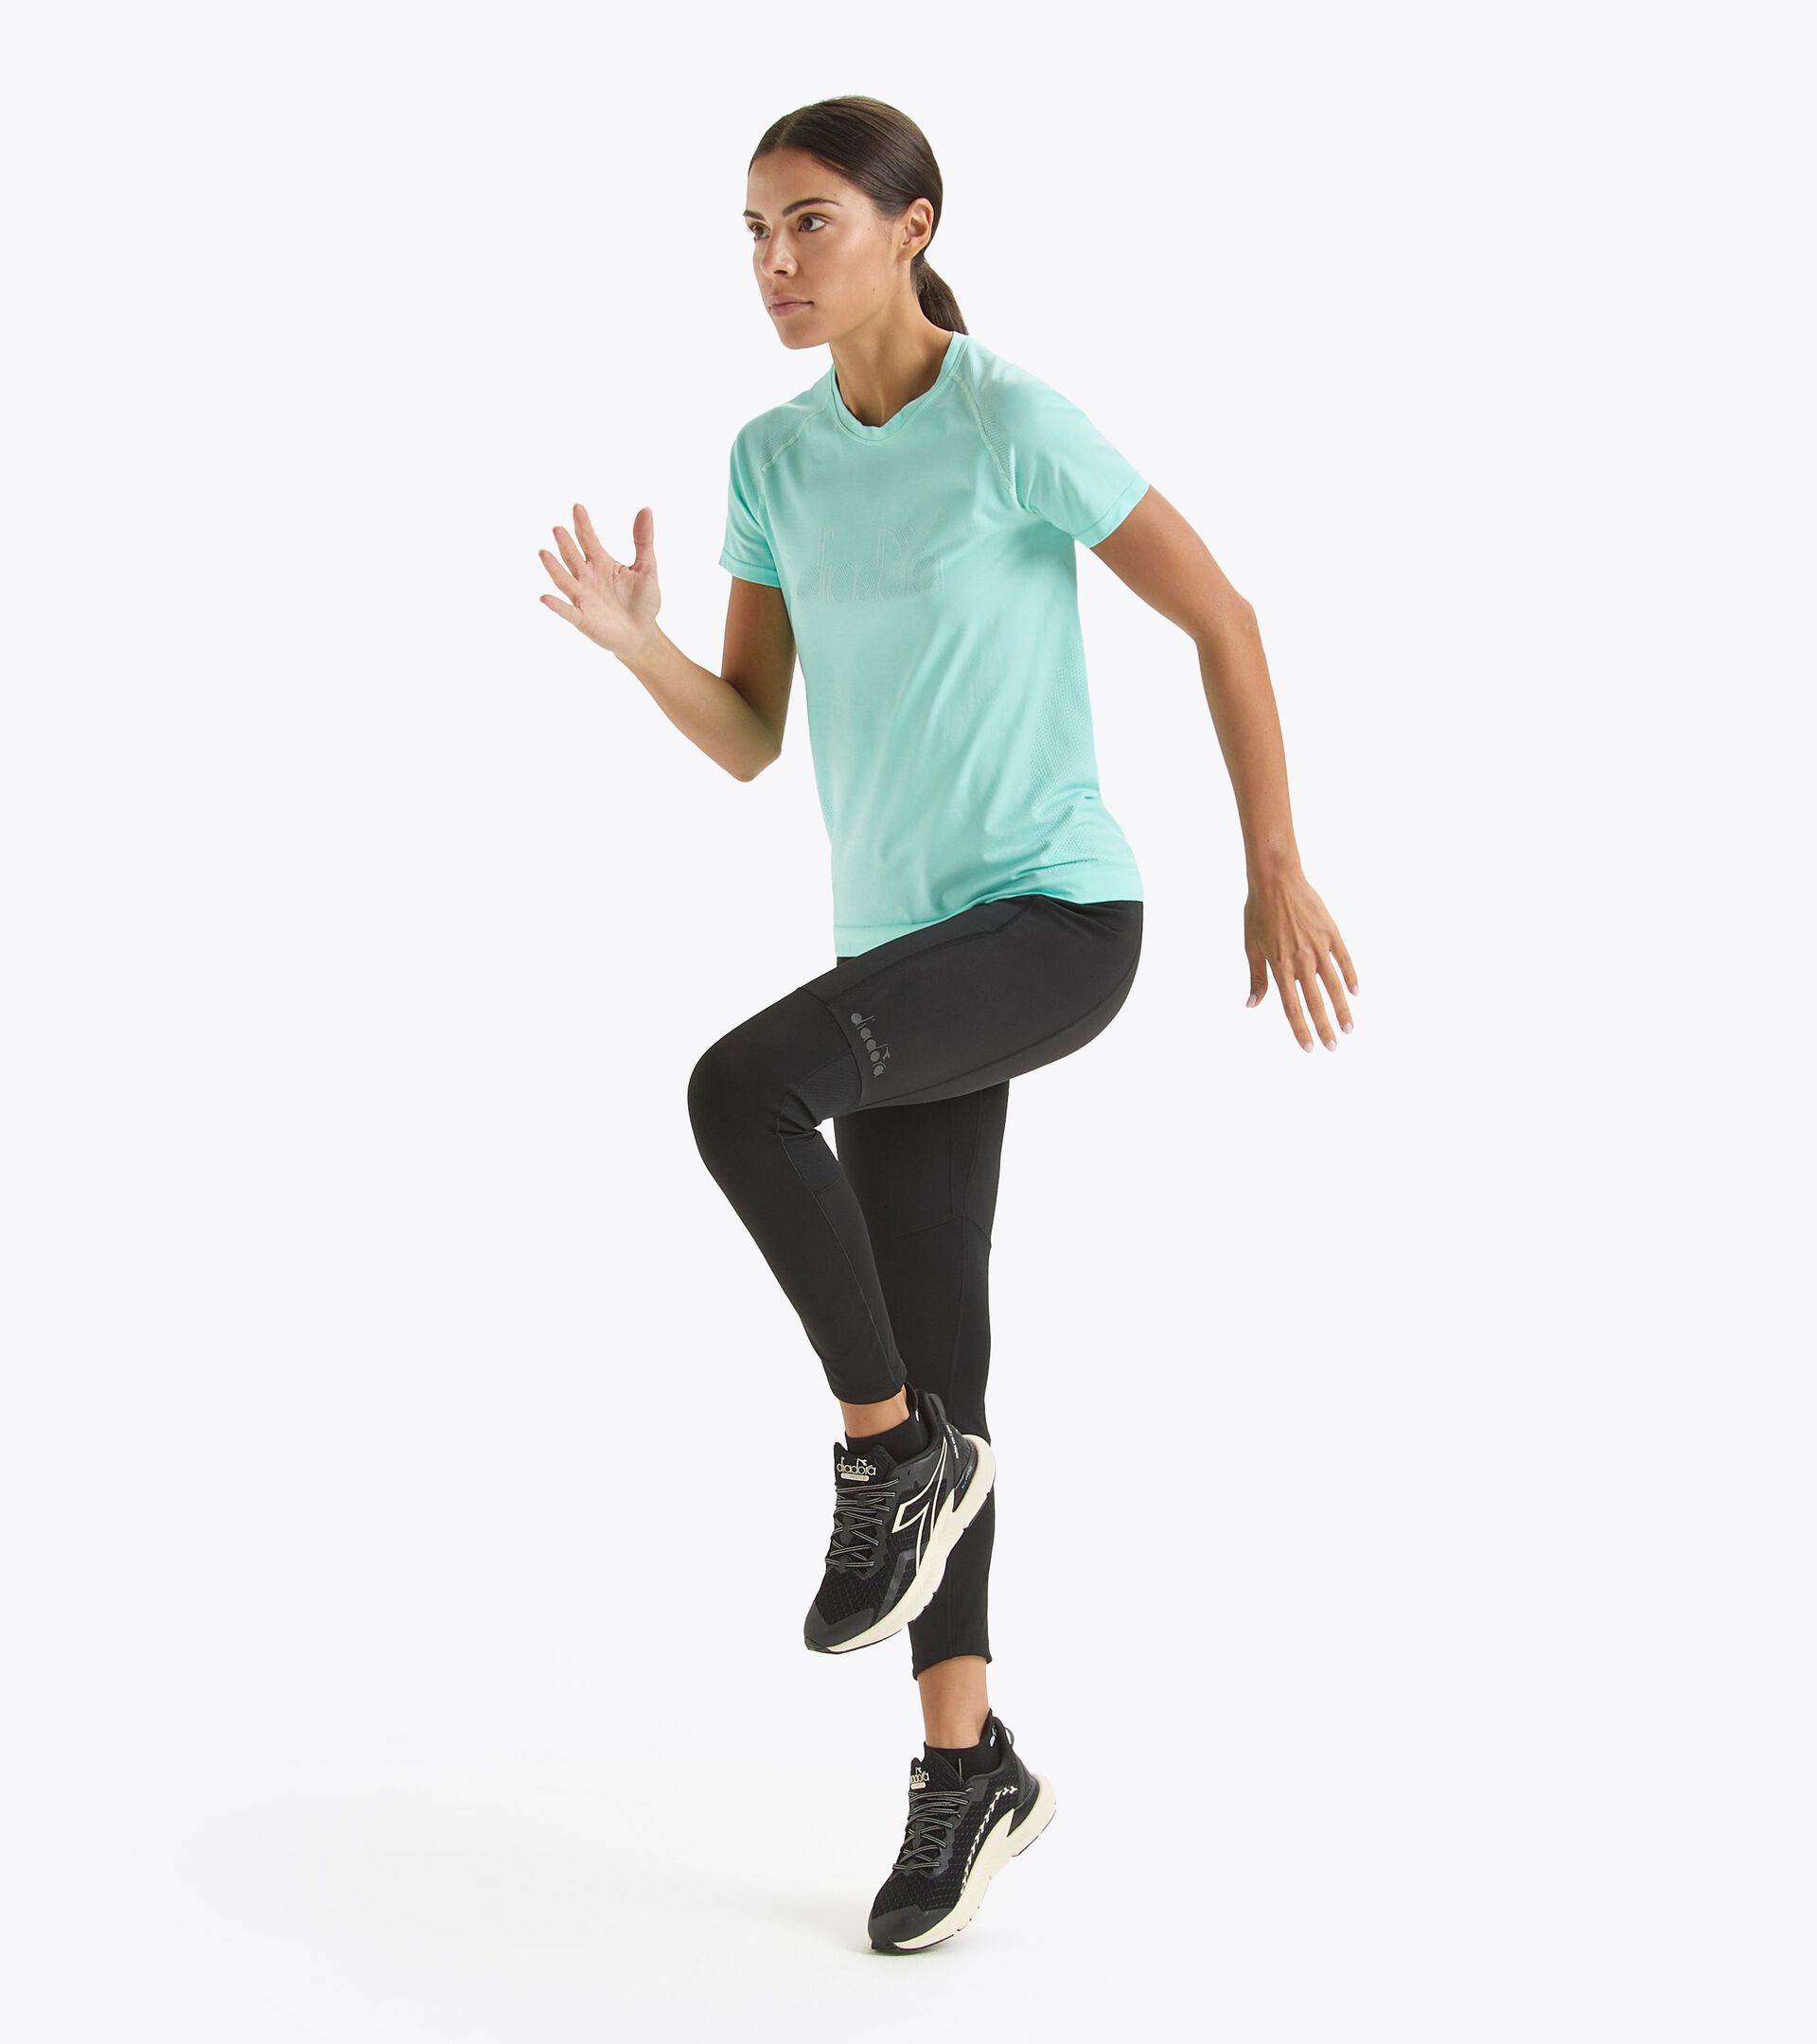 L. TIGHTS RUN CREW Running leggings - Women - Diadora Online Store DK